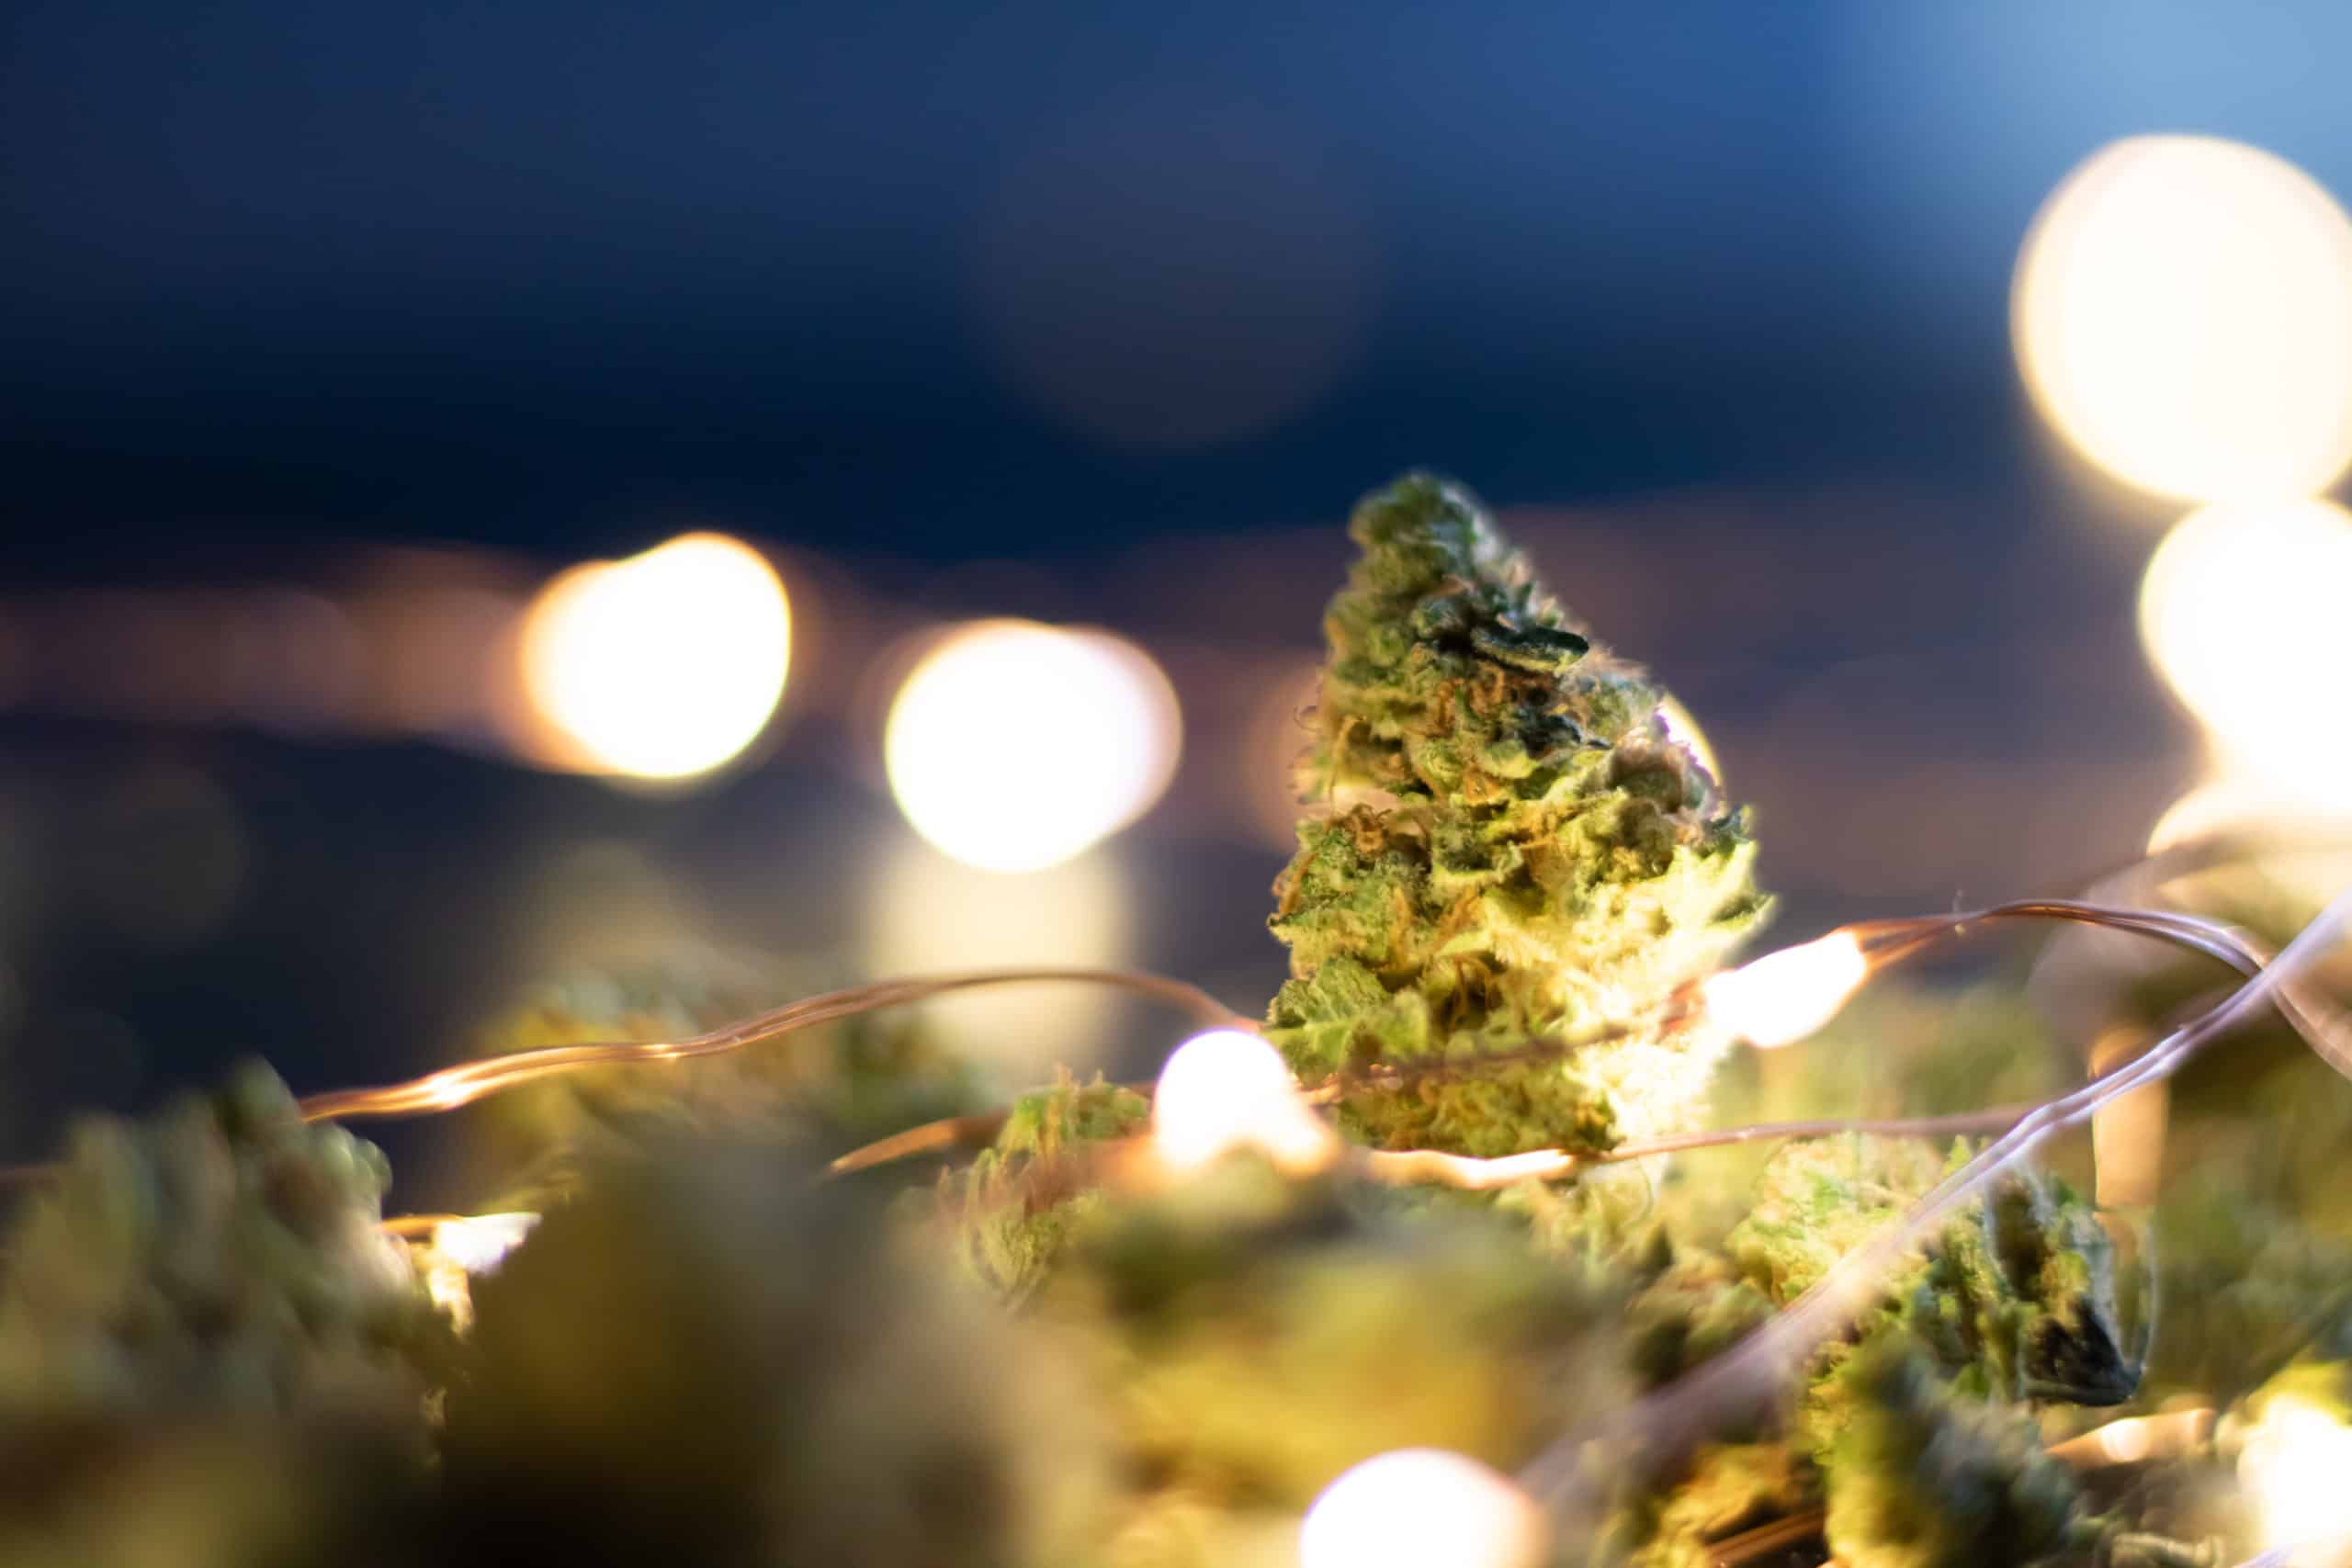 Christmas lights around marijuana